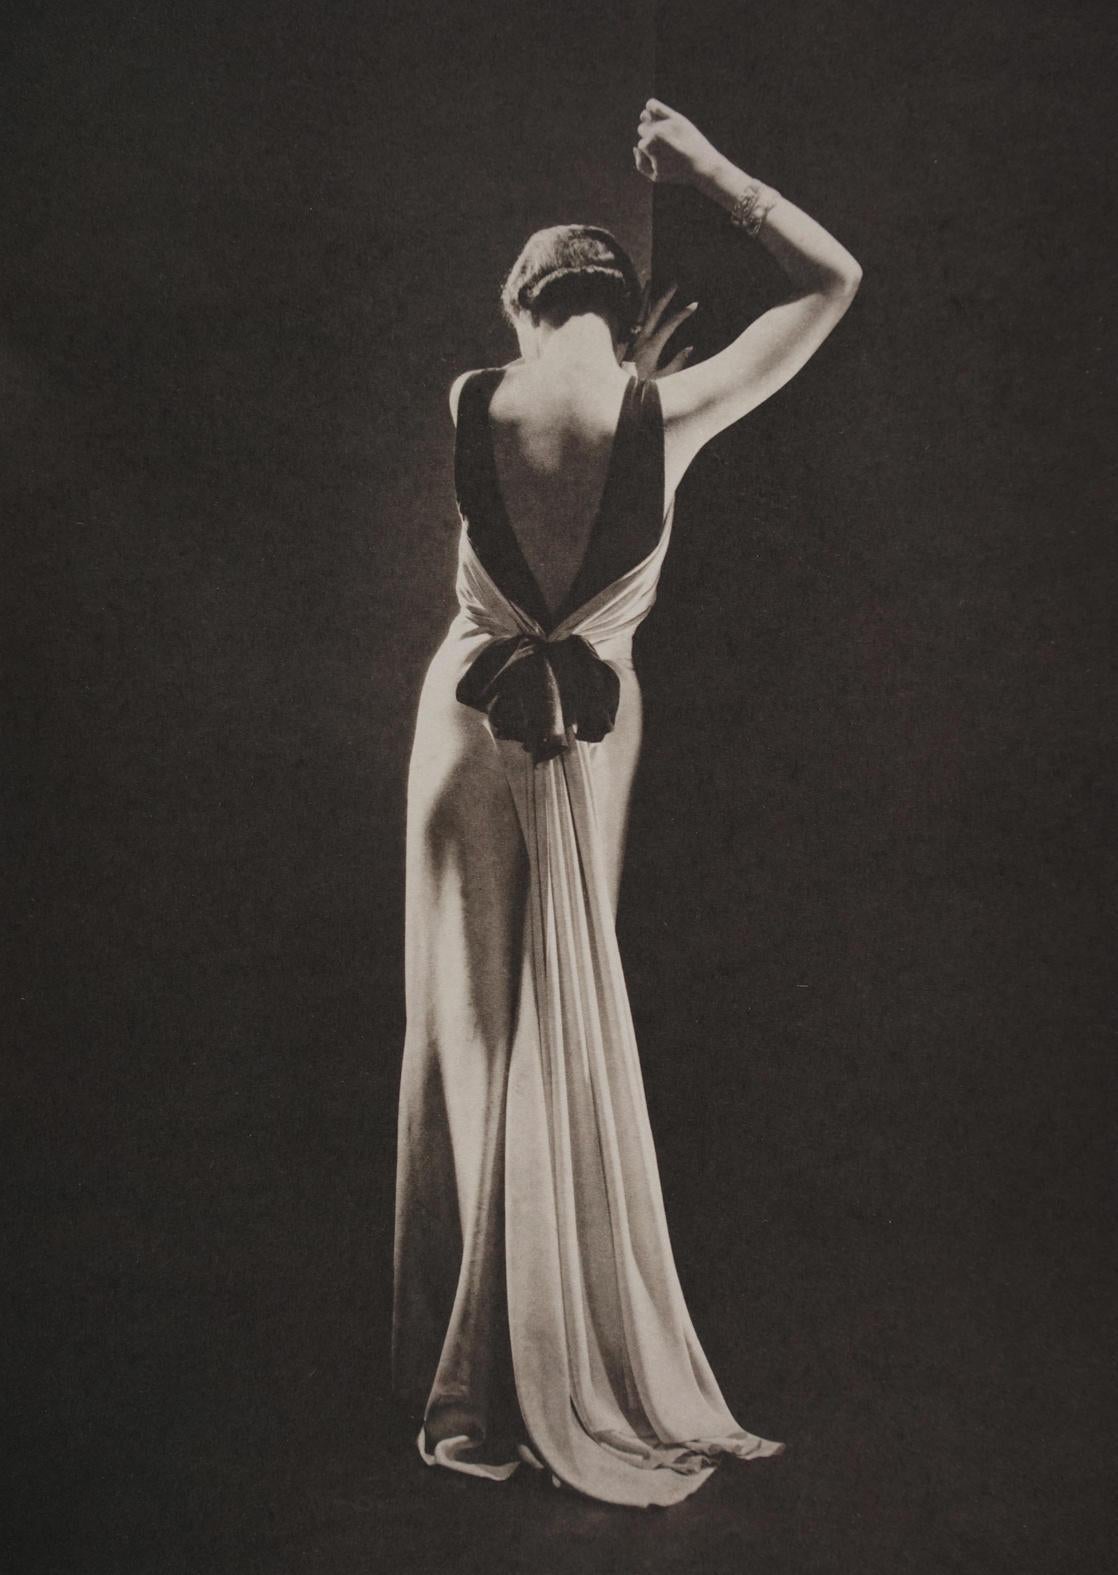 George Hoyningen-Huene Black and White Photograph - Toto Koopman wearing Augustabernard for Vogue